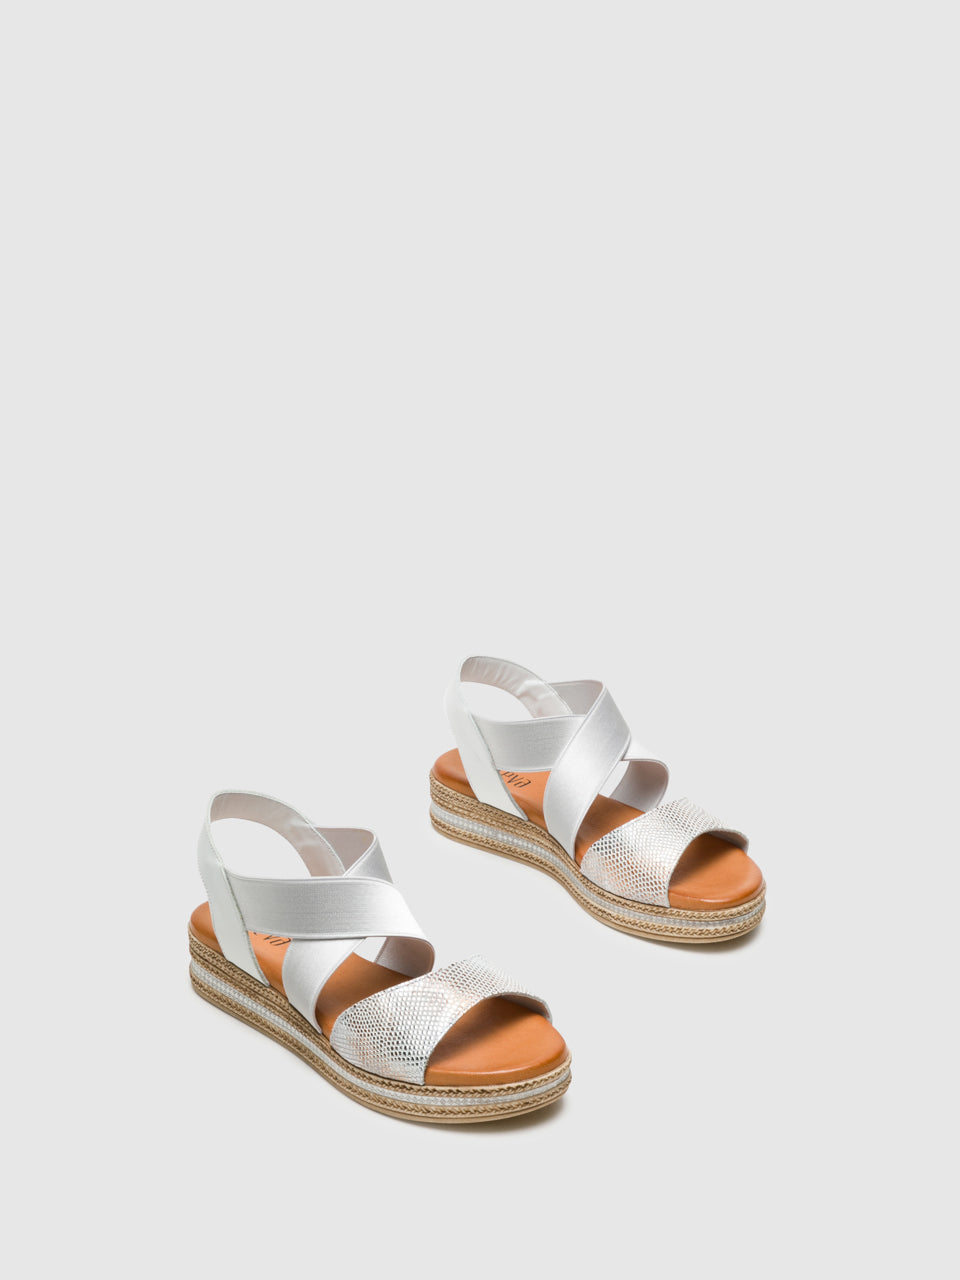 Foreva White Platform Sandals